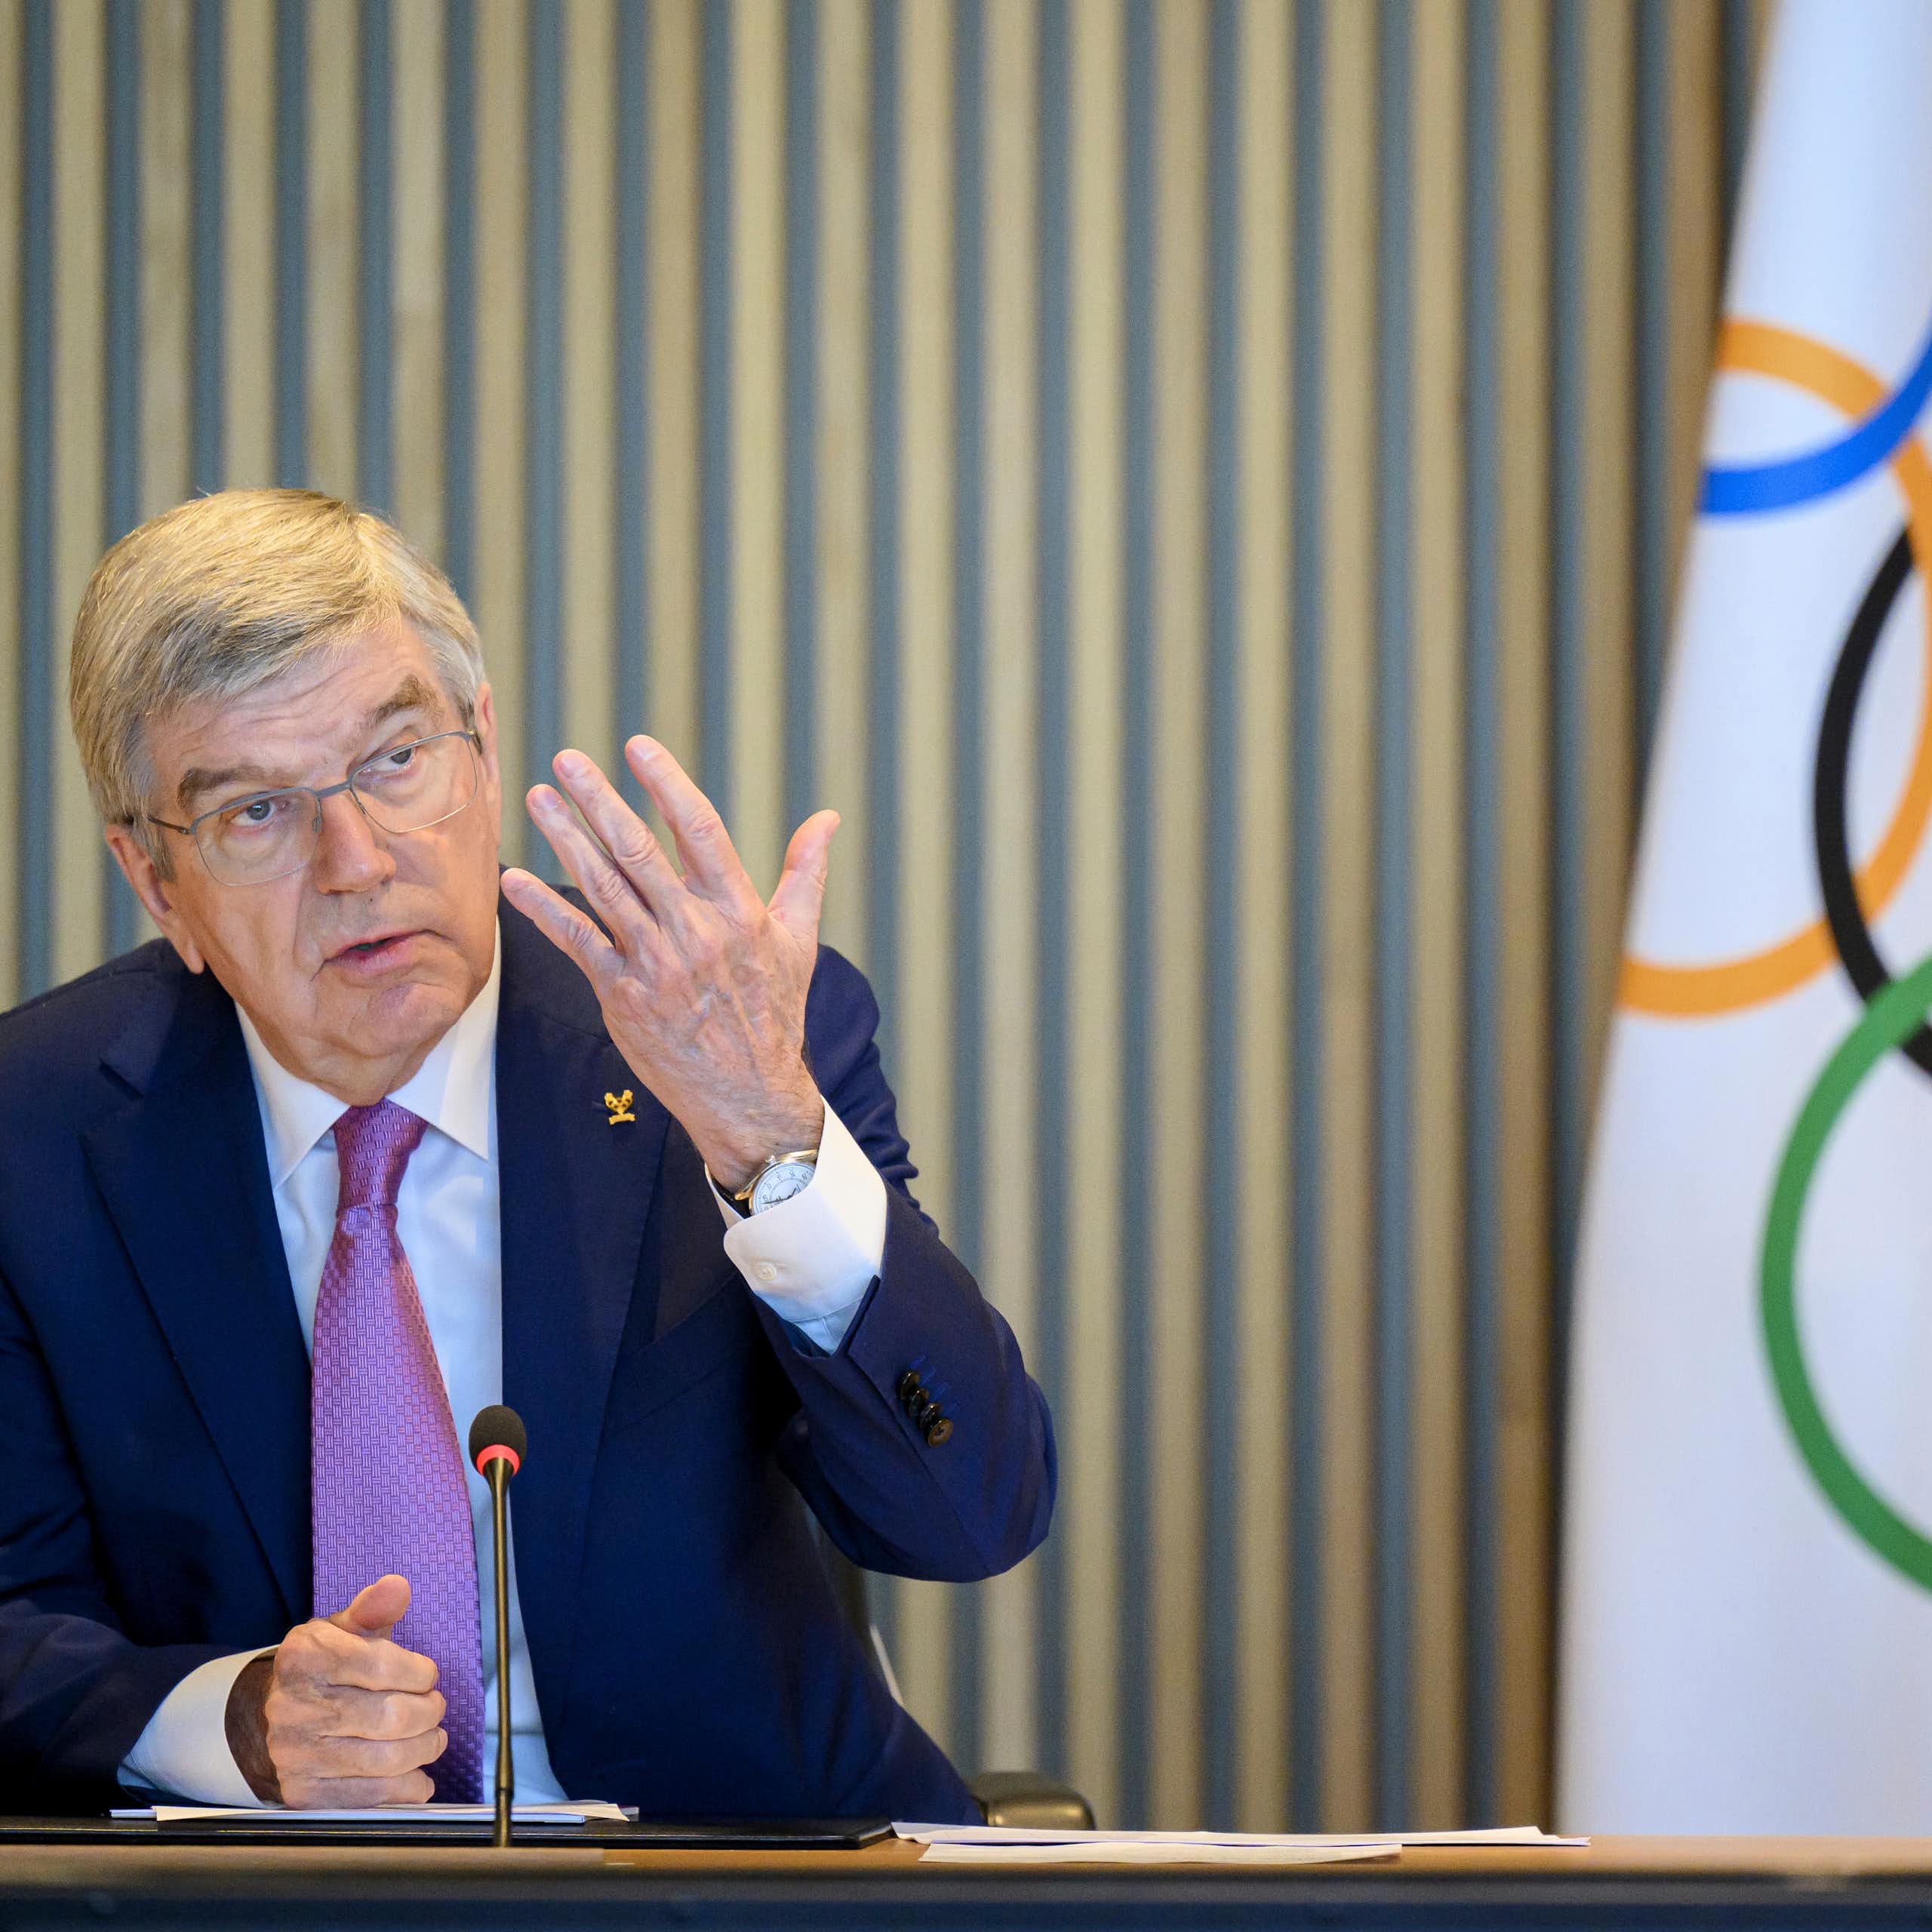 International Olympic Committee (IOC) President Thomas Bach speaks